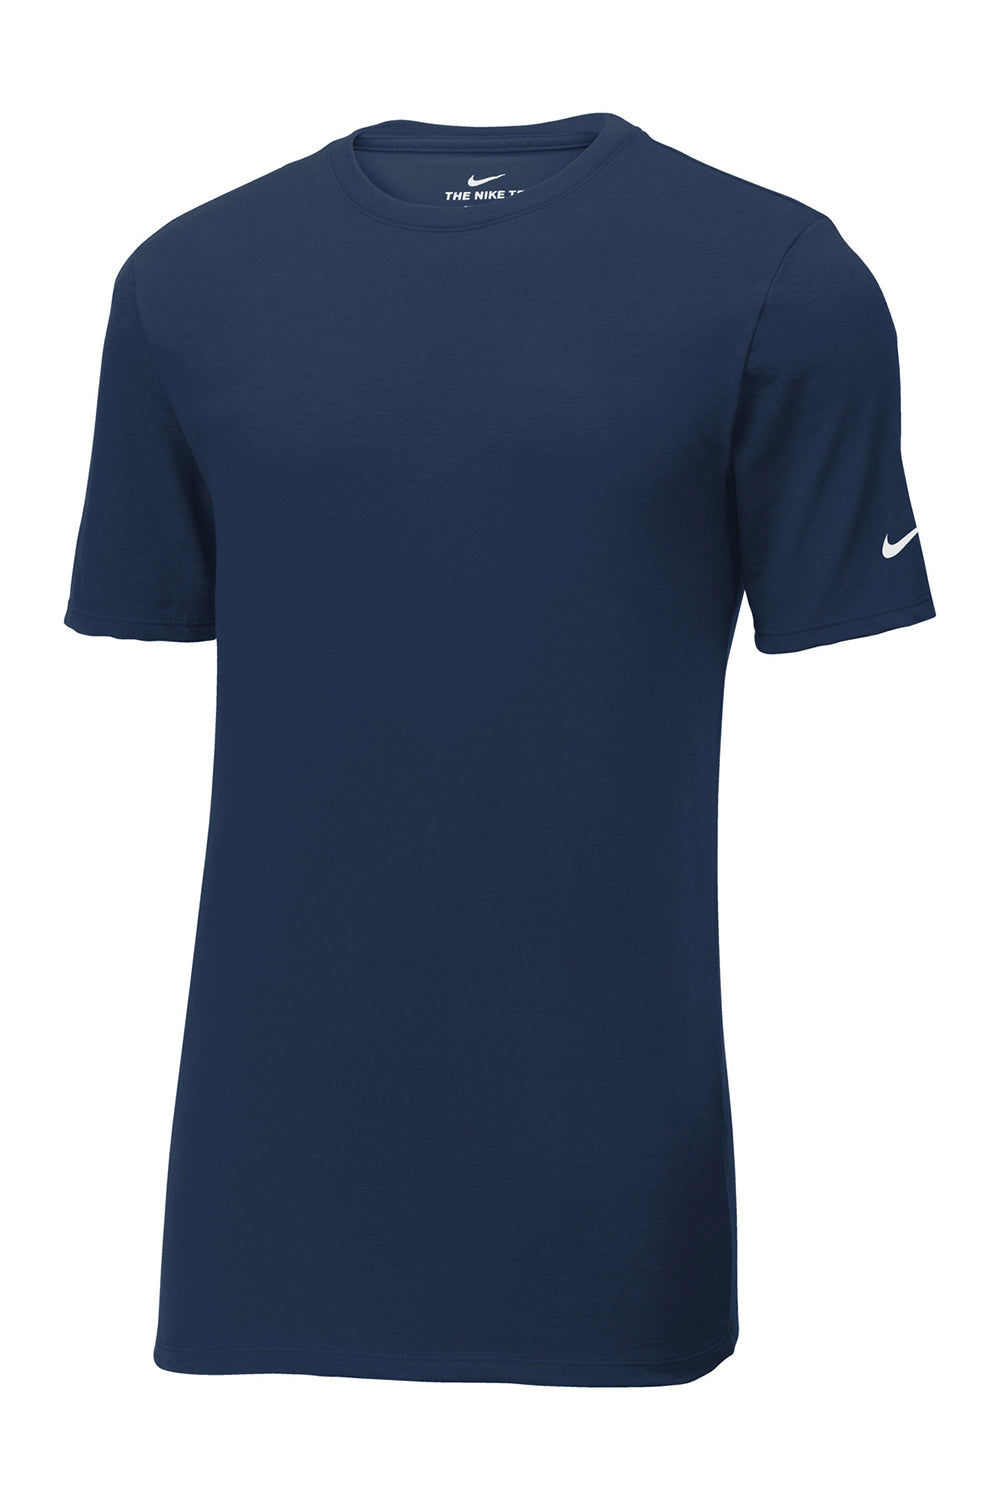 Nike NKBQ5231 Mens Dri-Fit Moisture Wicking Short Sleeve Crewneck T-Shirt College Navy Blue Flat Front